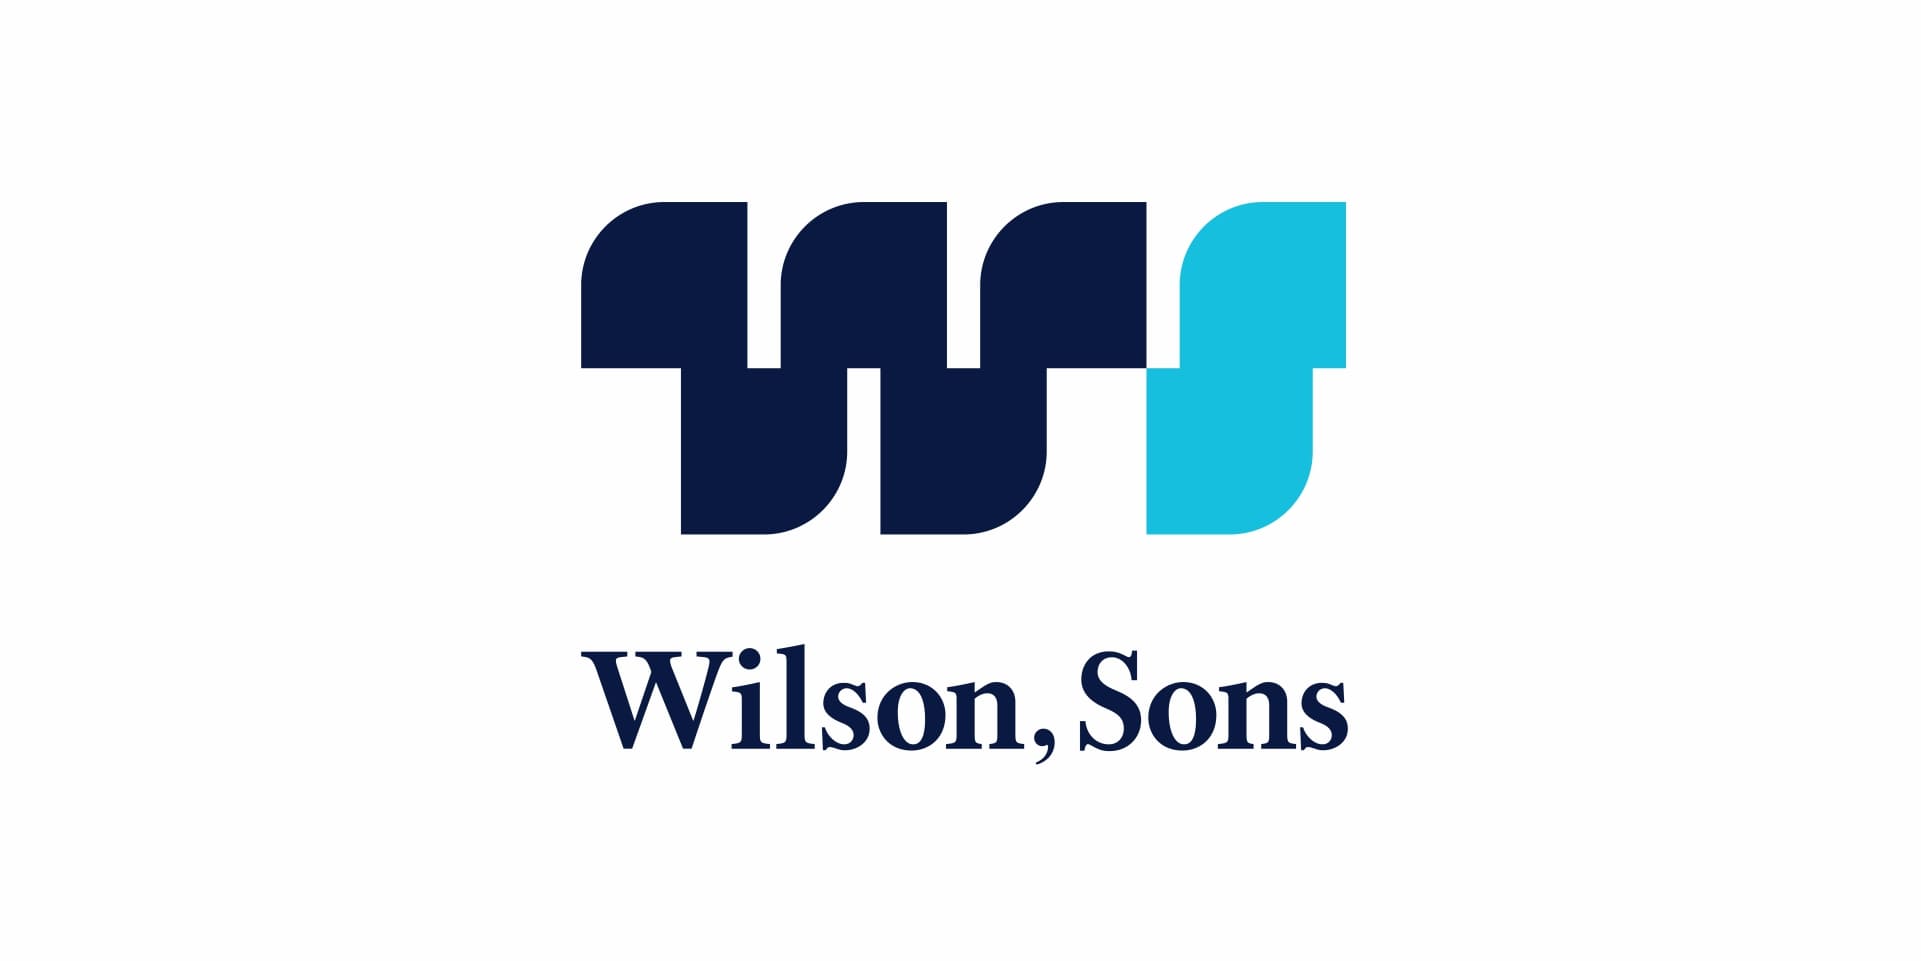 WILSON SONS